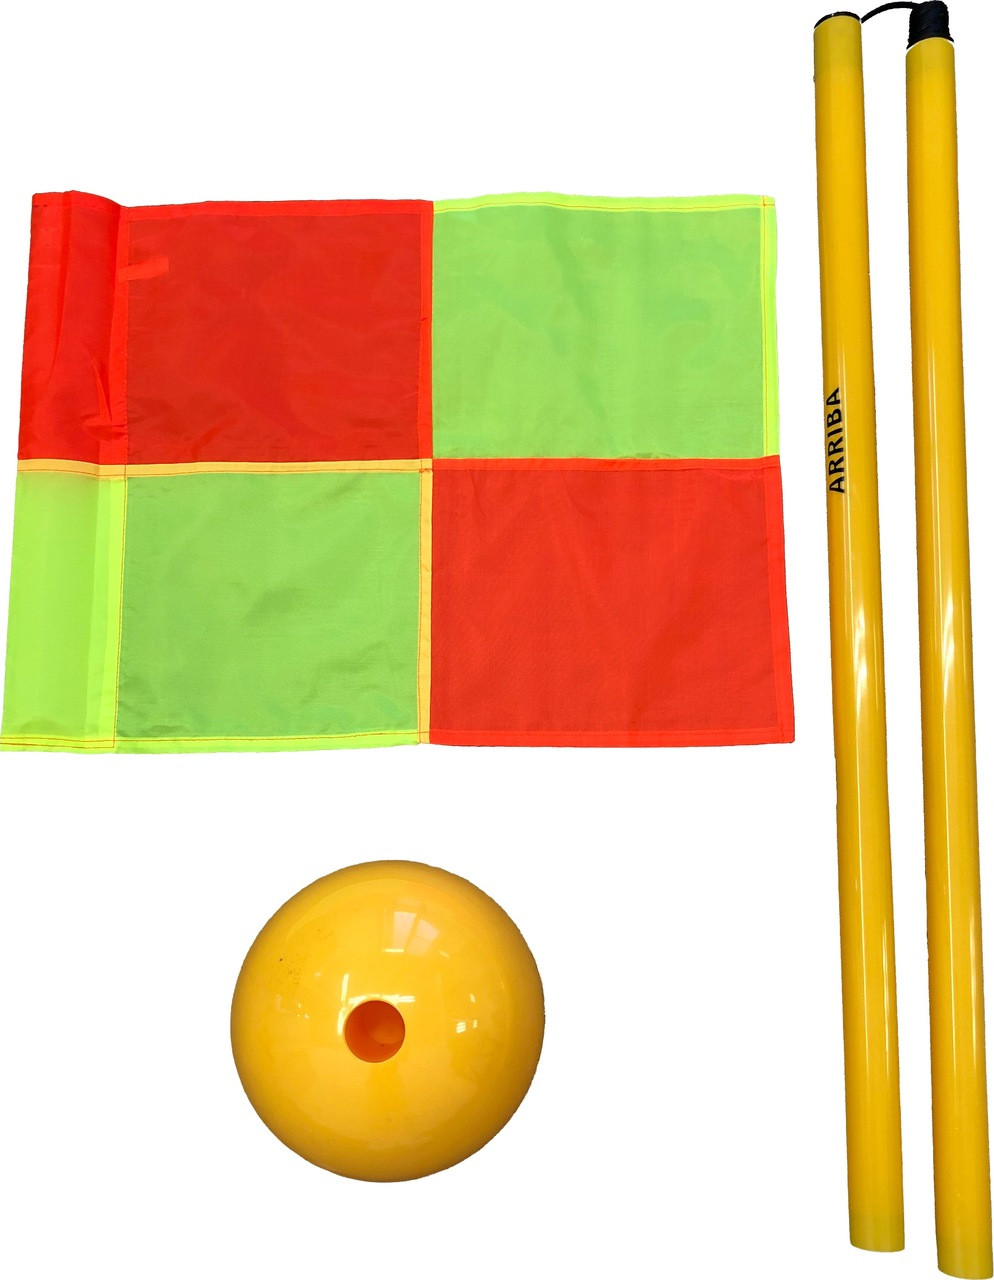 Football training equipment training flag poles obstacles